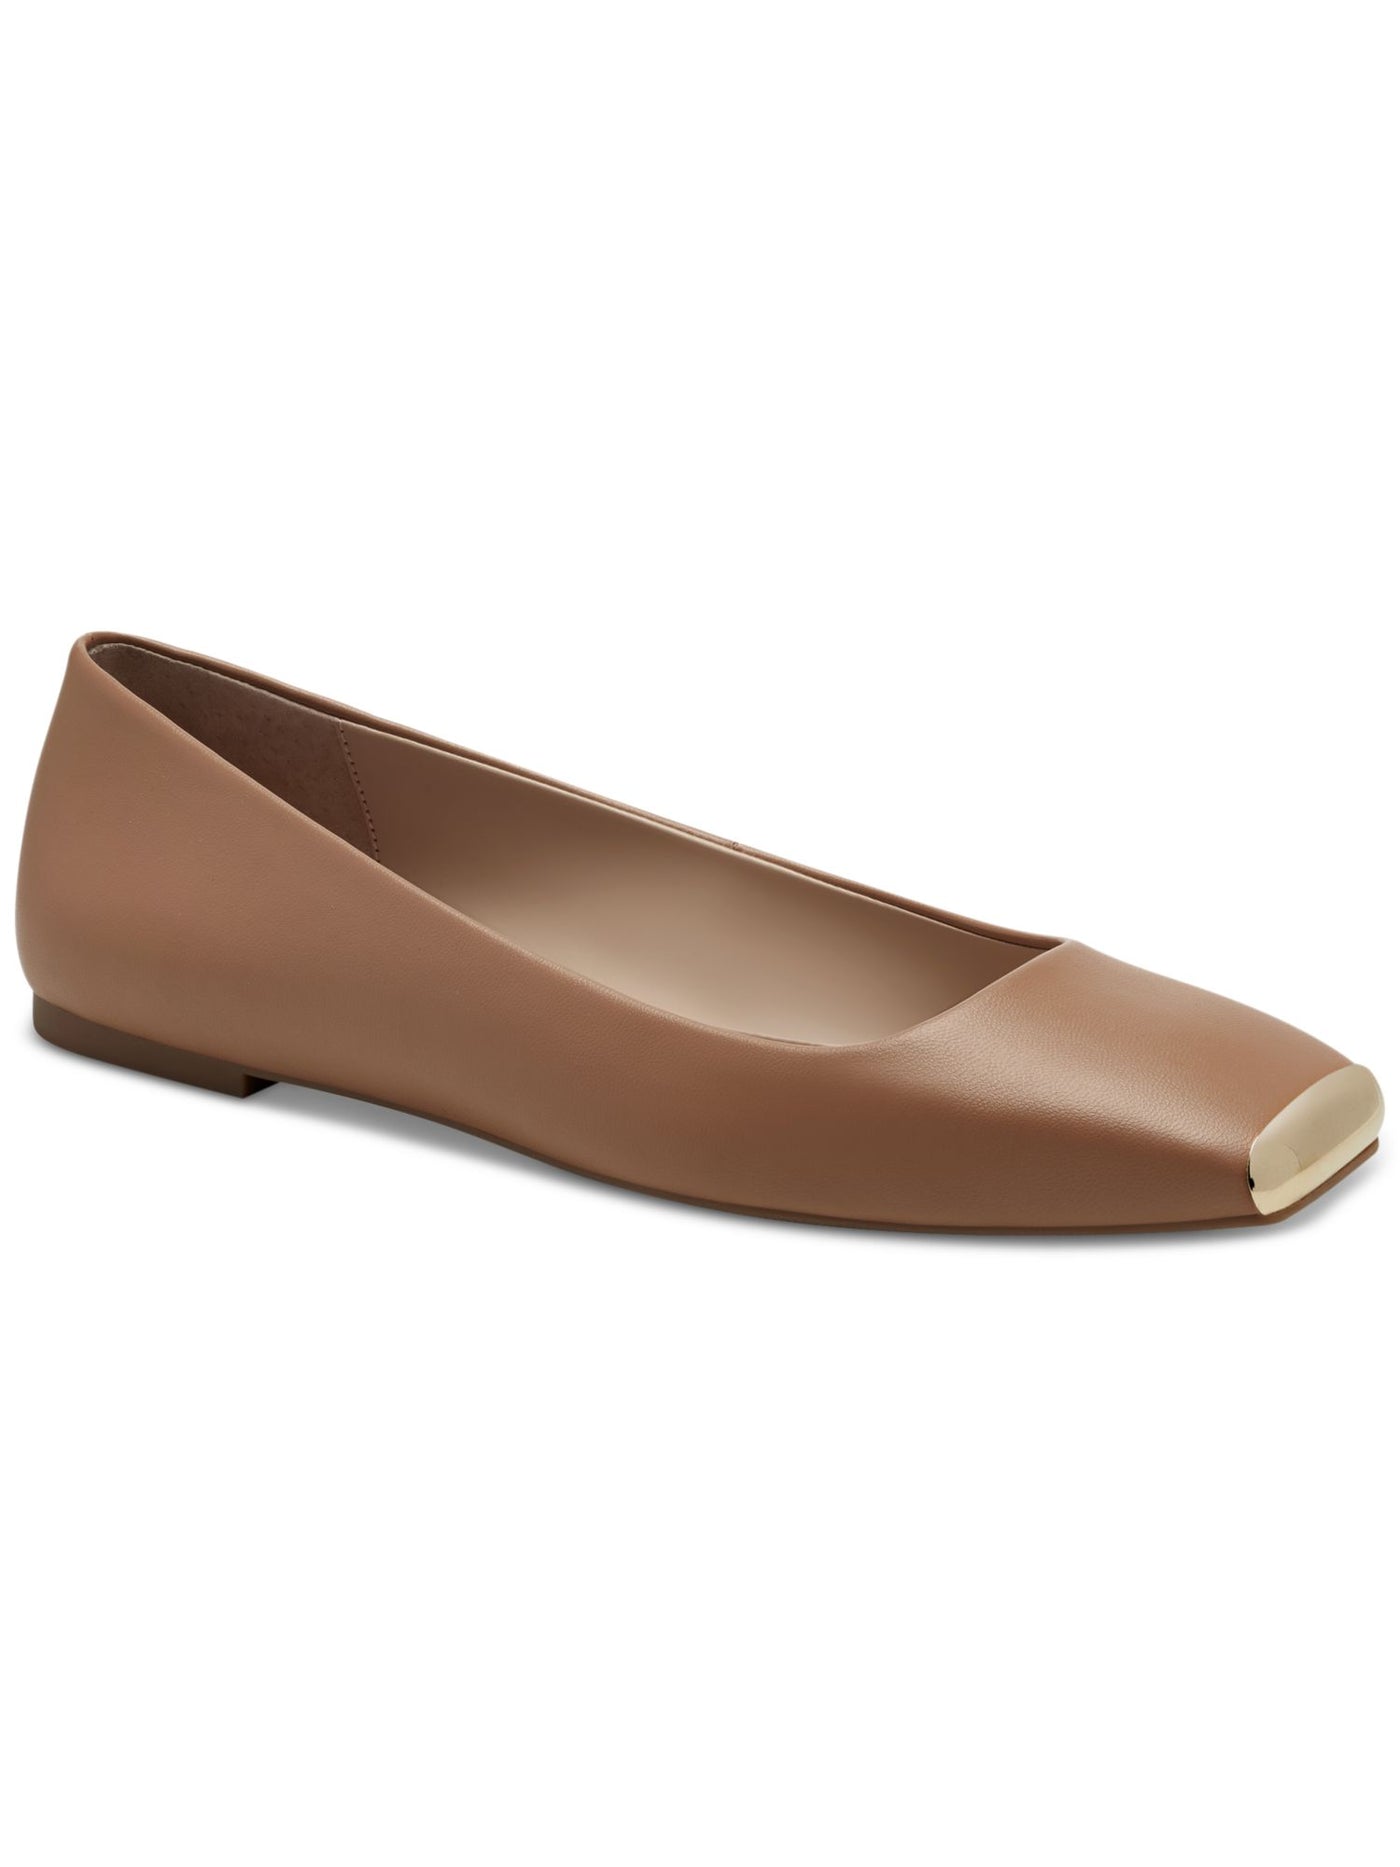 ALFANI Womens Brown Flexible Sole Padded Metallic Neptoon Square Toe Block Heel Slip On Flats Shoes 11 M